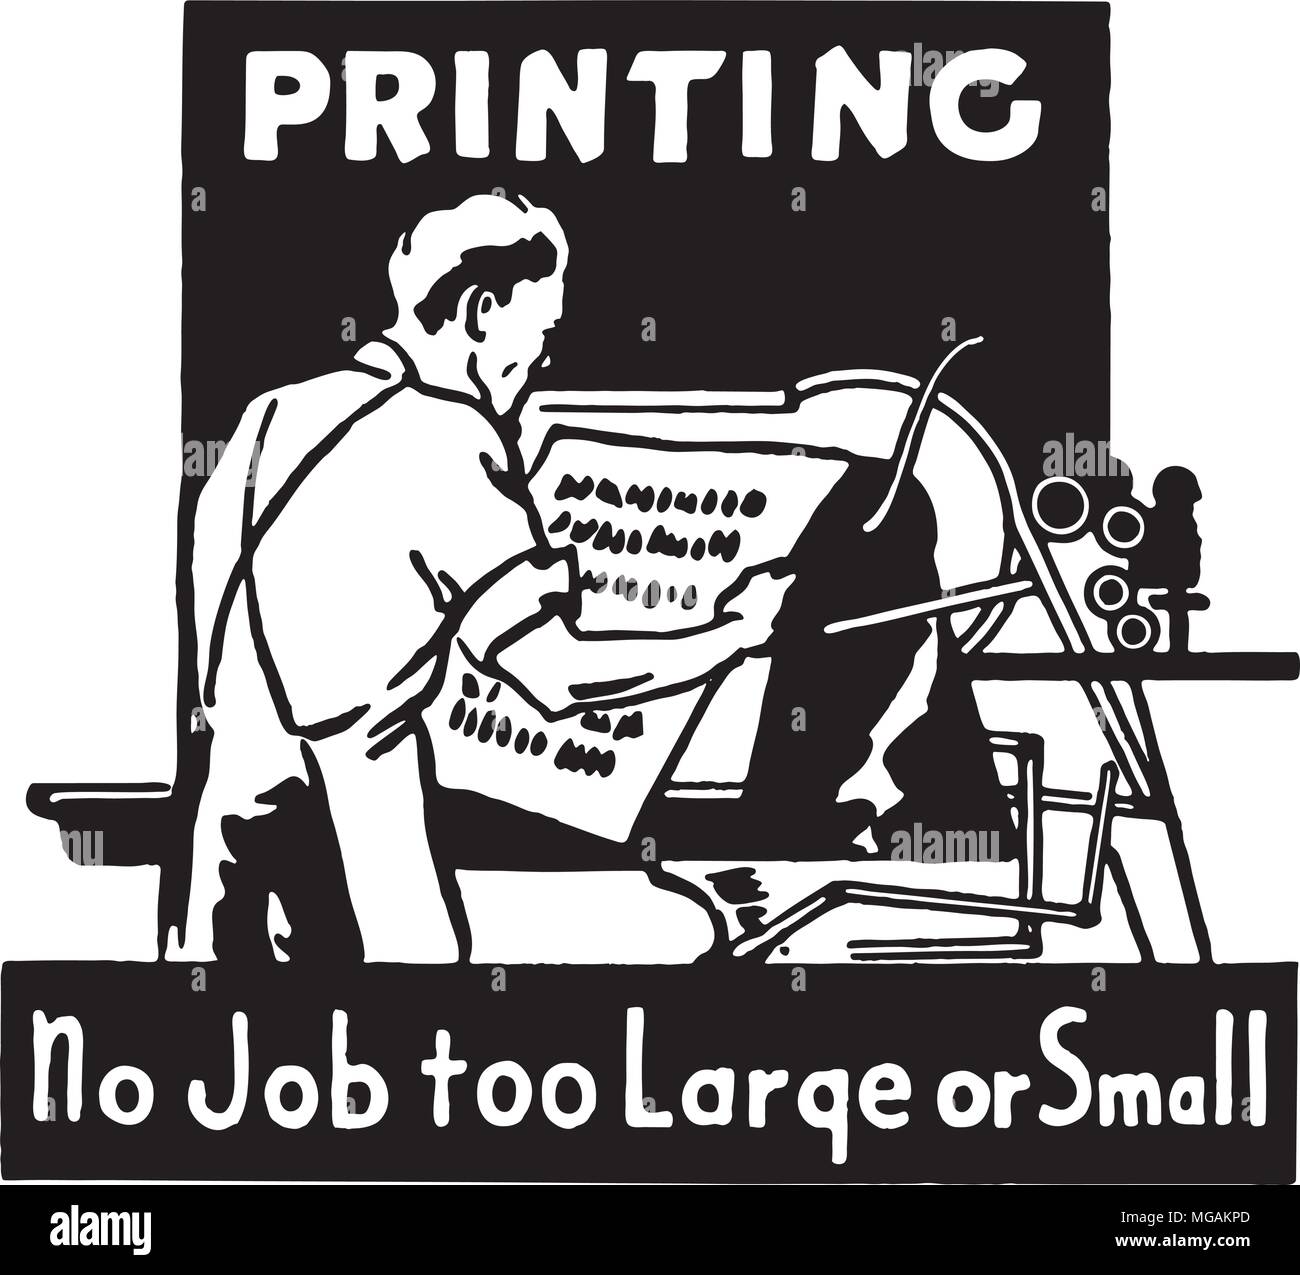 Printing - Retro Ad Art Banner Stock Vector